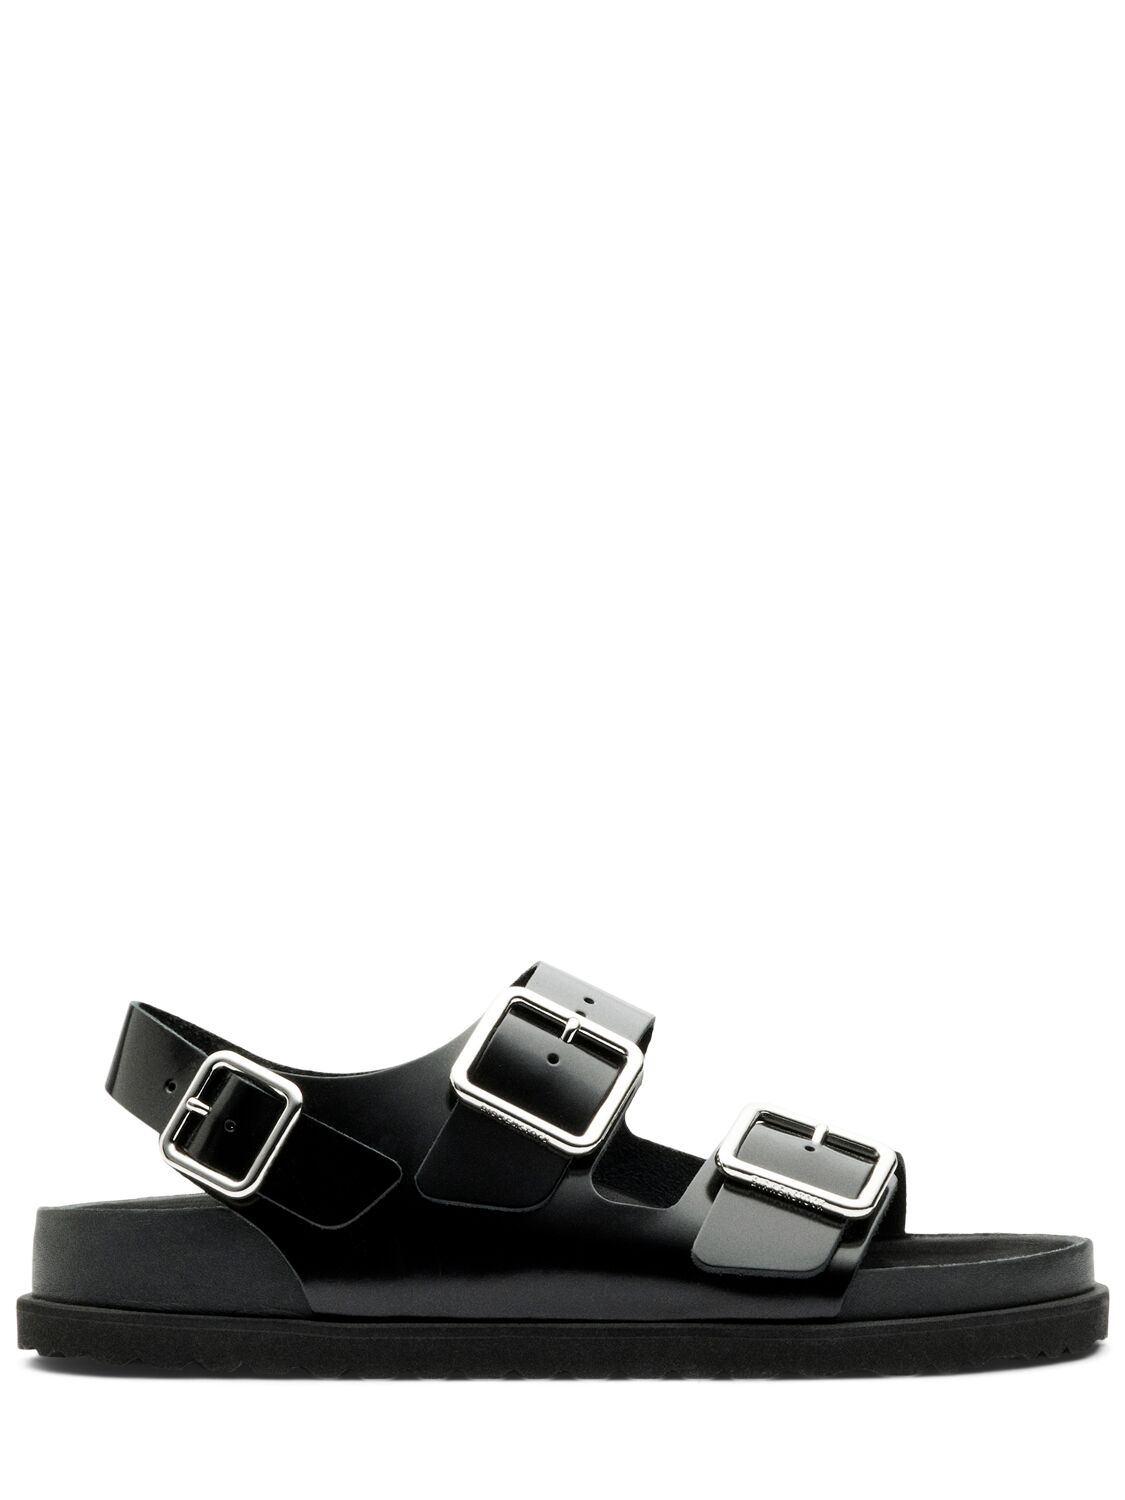 Image of Milano Shiny Leather Sandals